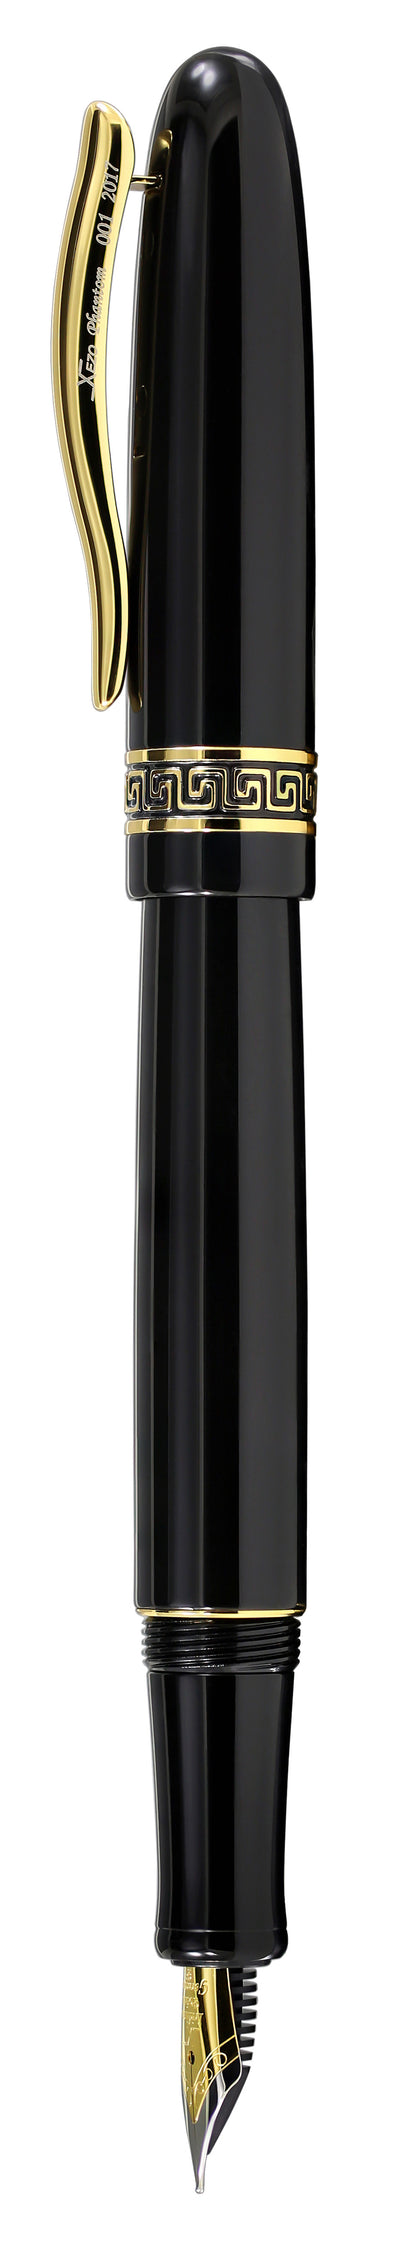 Xezo - Side view of the  Phantom Classic Black F fountain pen